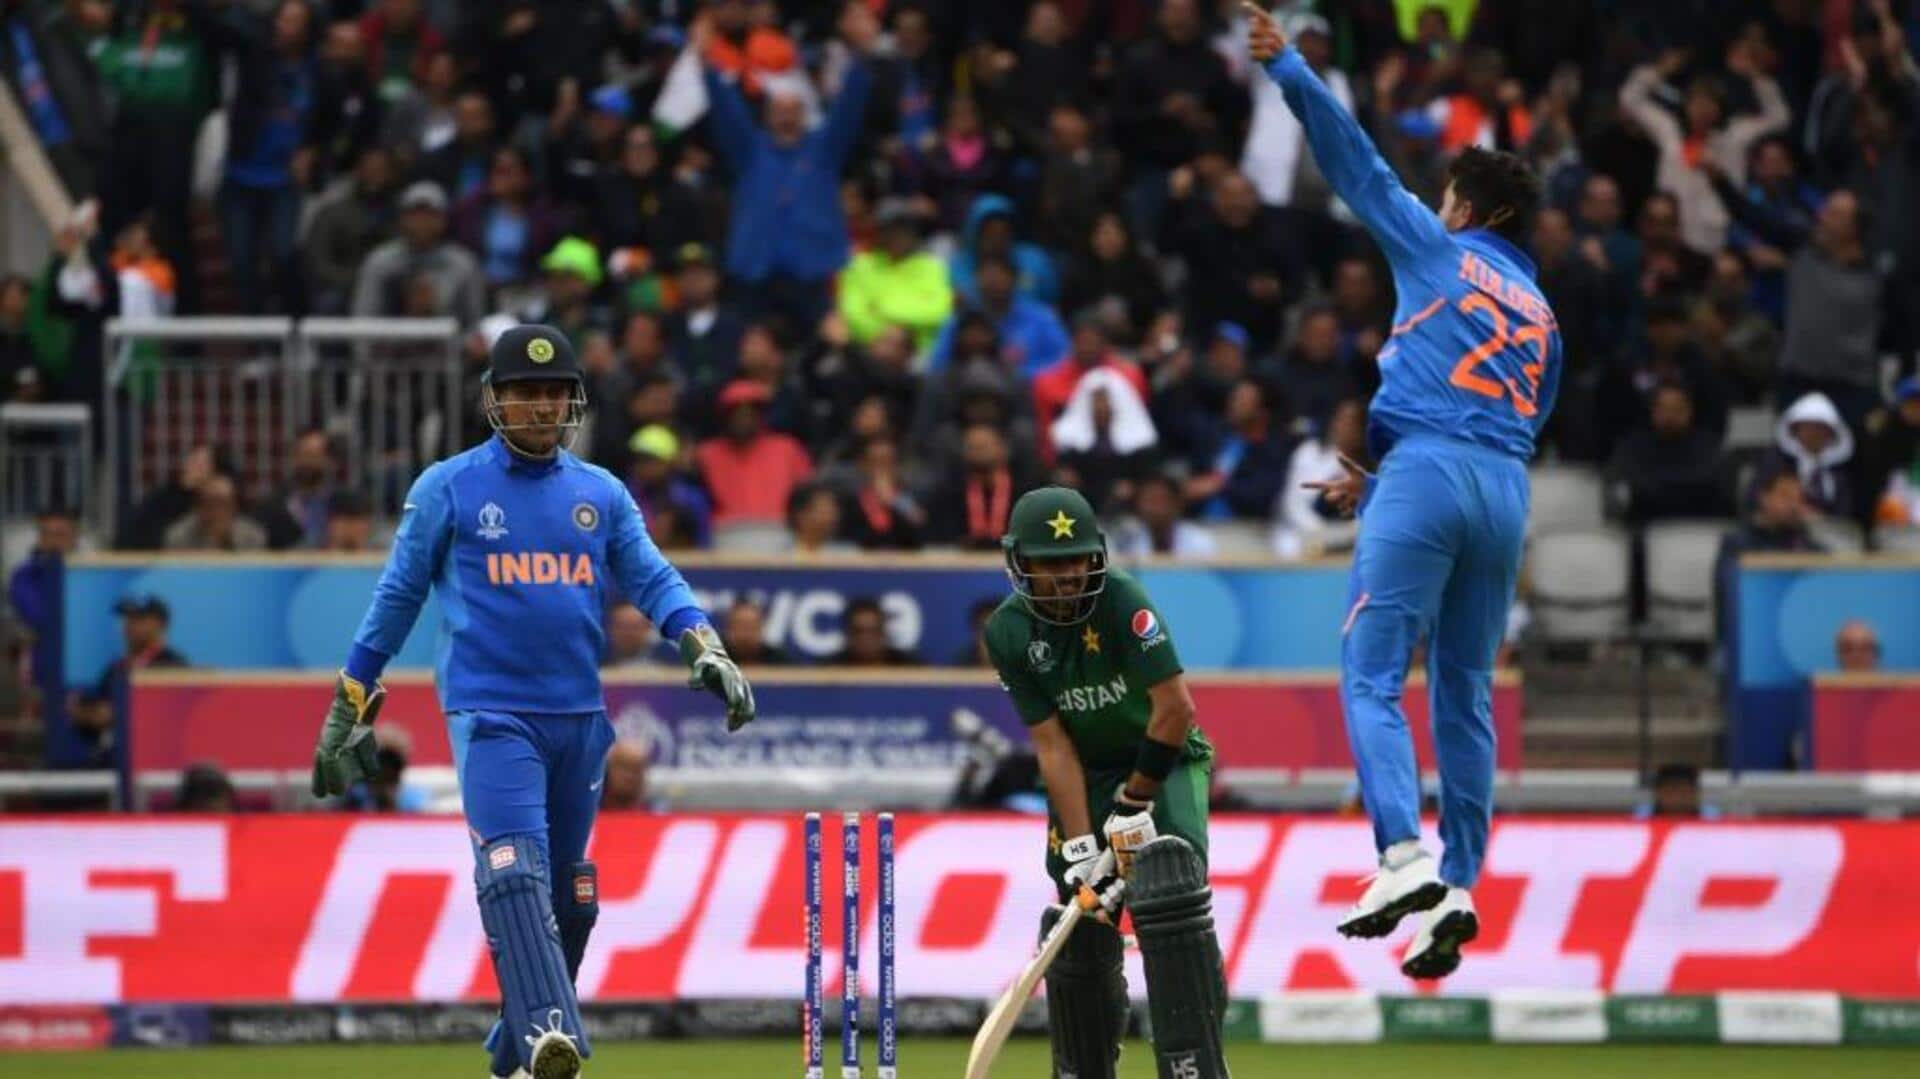 ICC Cricket World Cup, India vs Pakistan: Key player battles